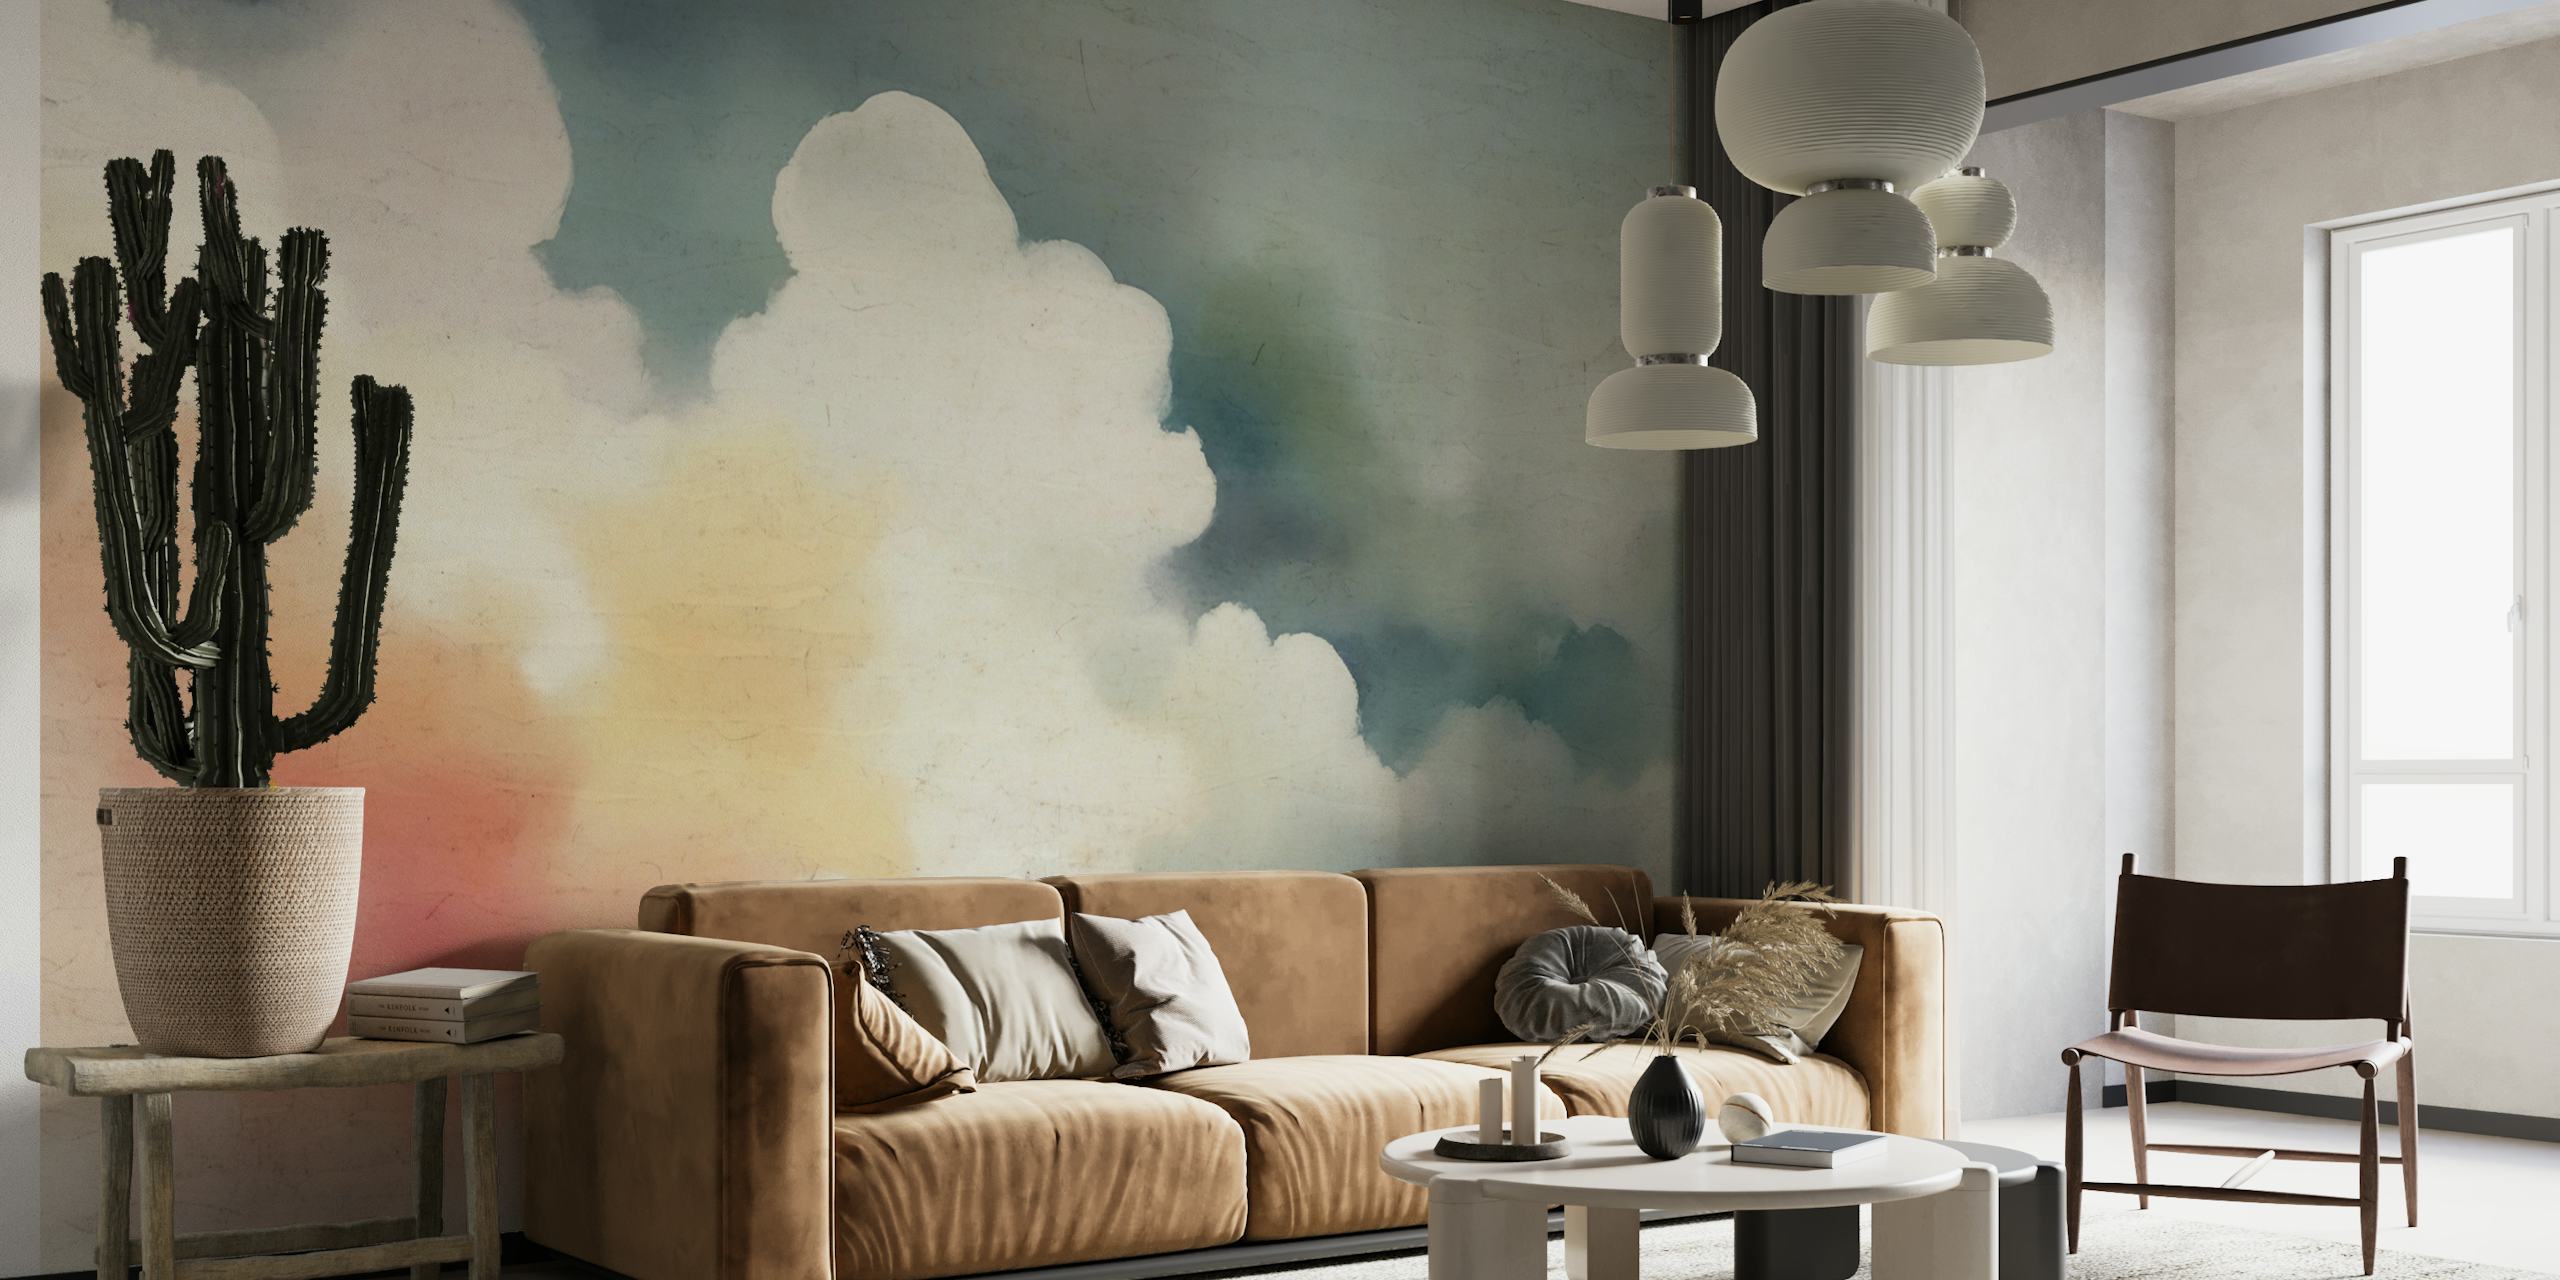 Pastelkleurige wolkenmuurschildering die rust en sereniteit oproept